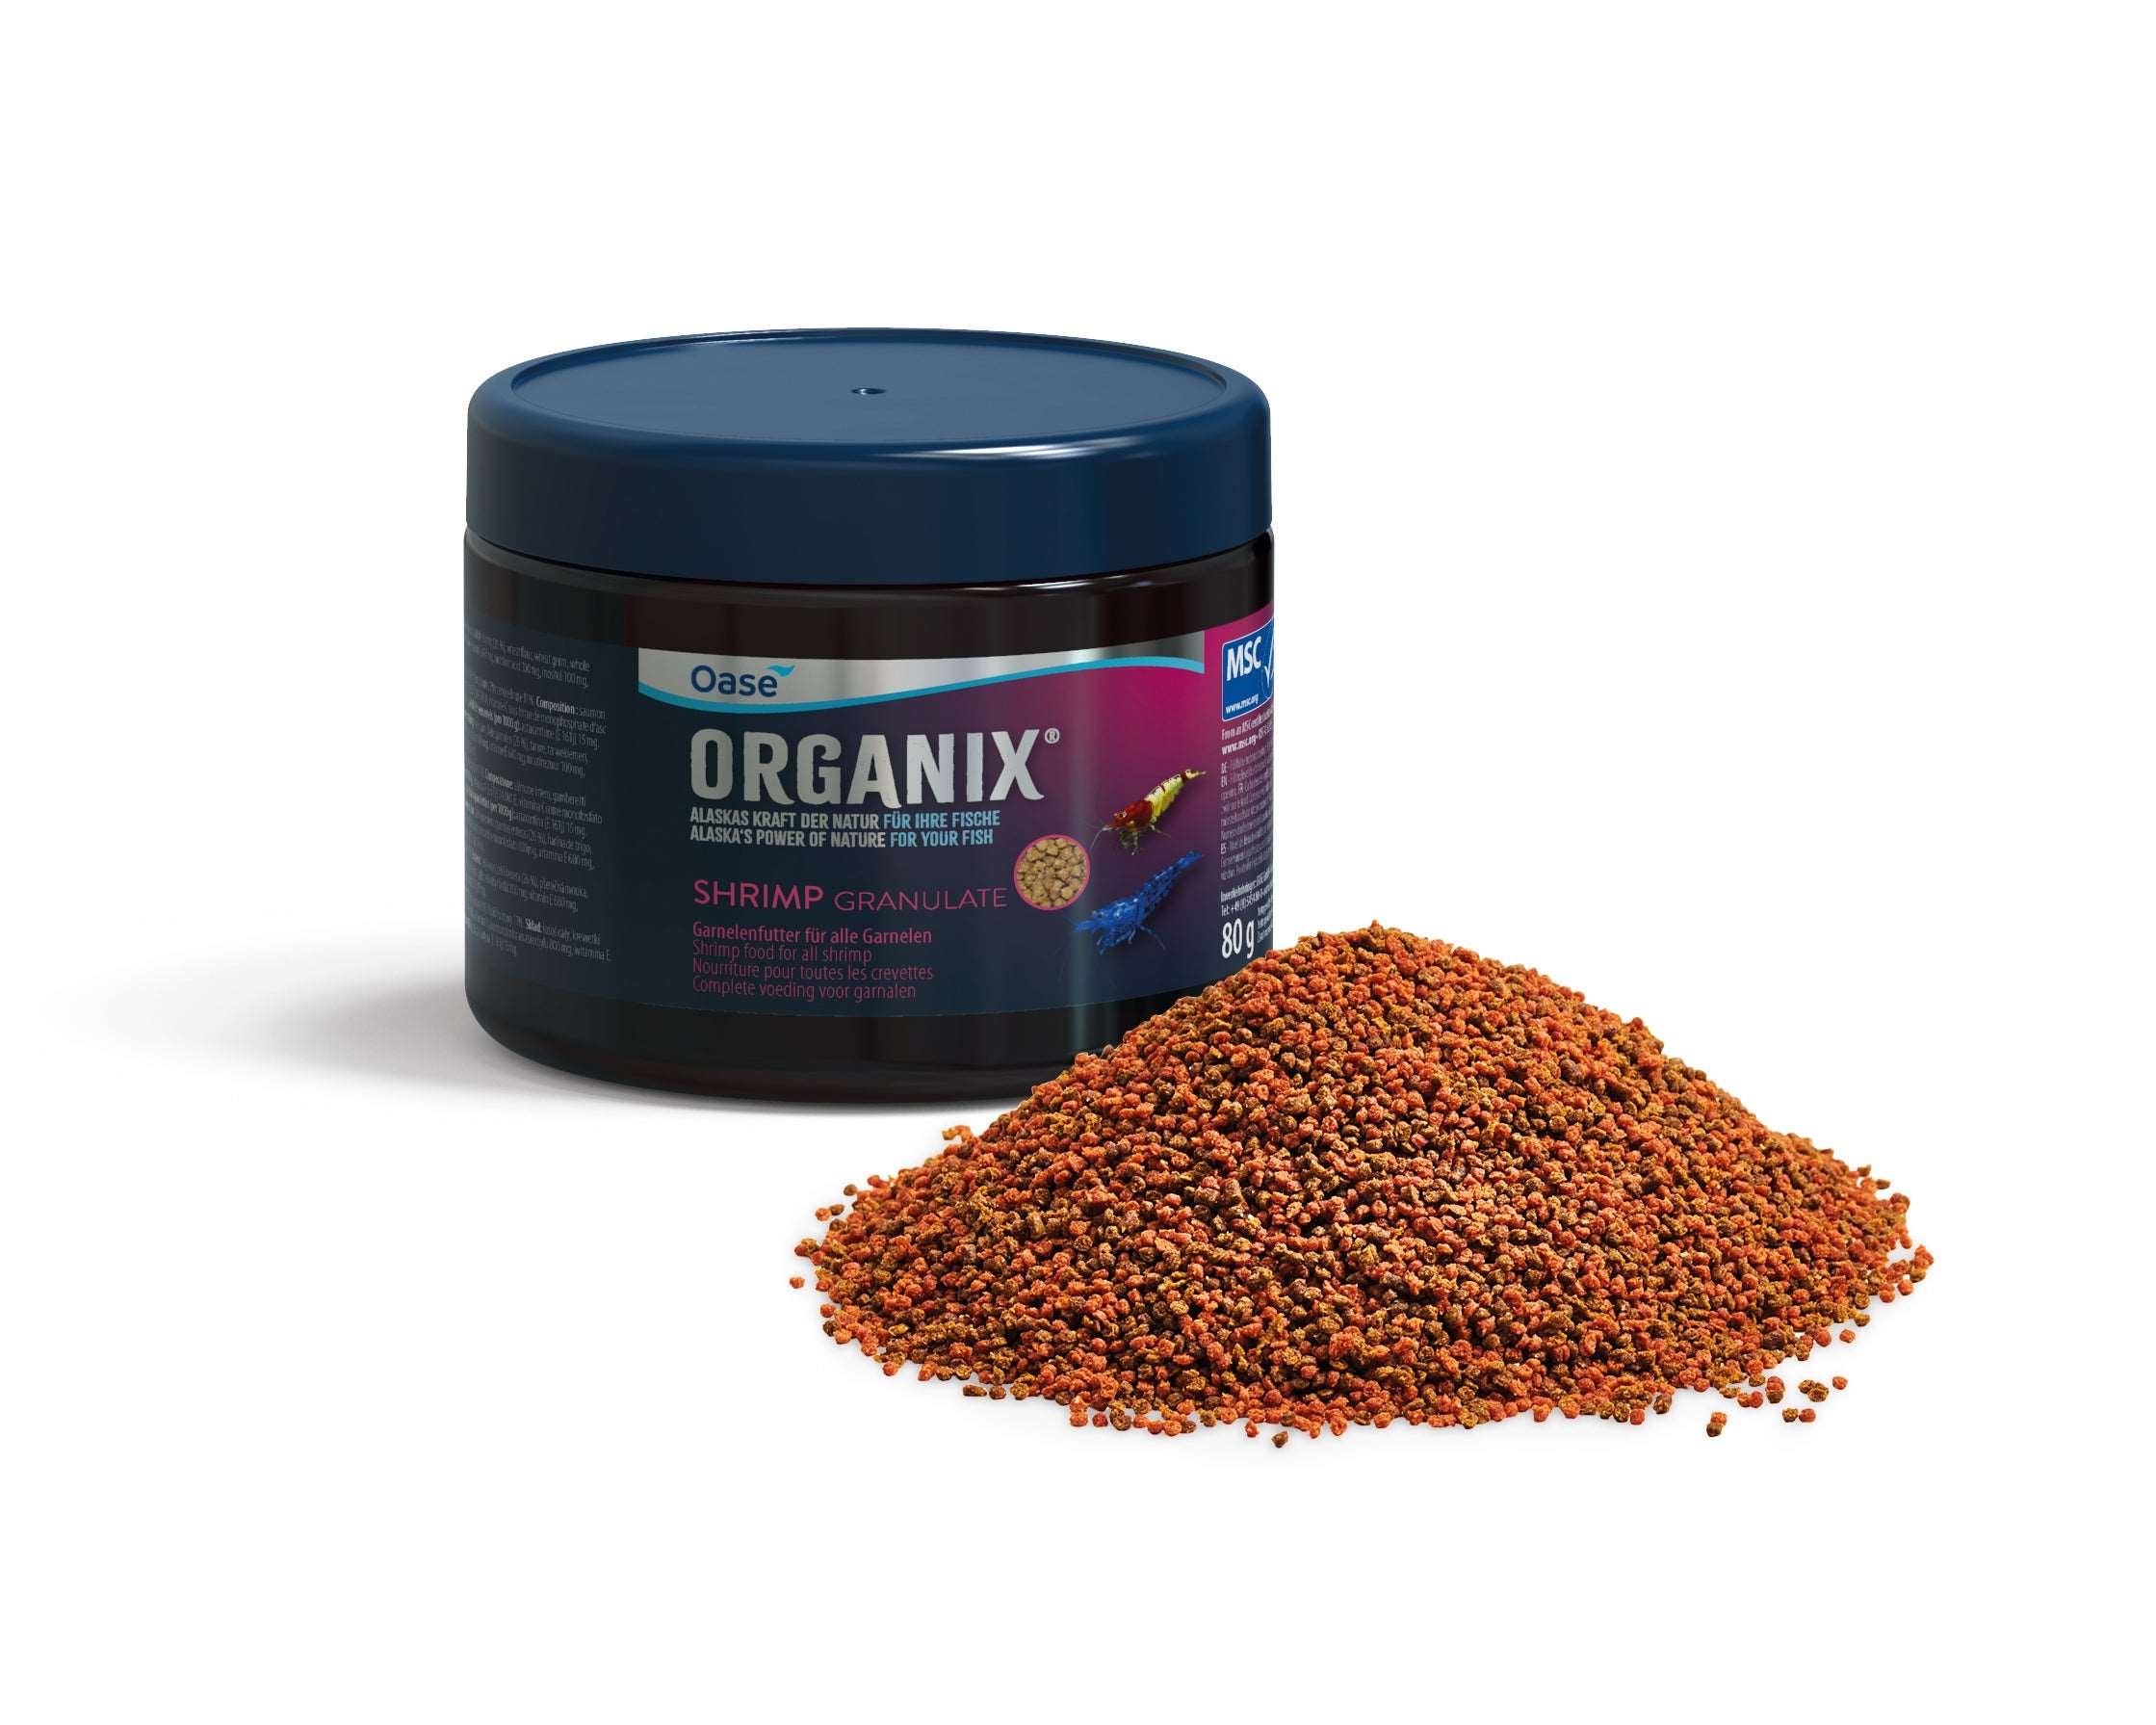 Hrana granulata pentru creveti, ORGANIX Shrimp Granulate 150 ml / 80 g